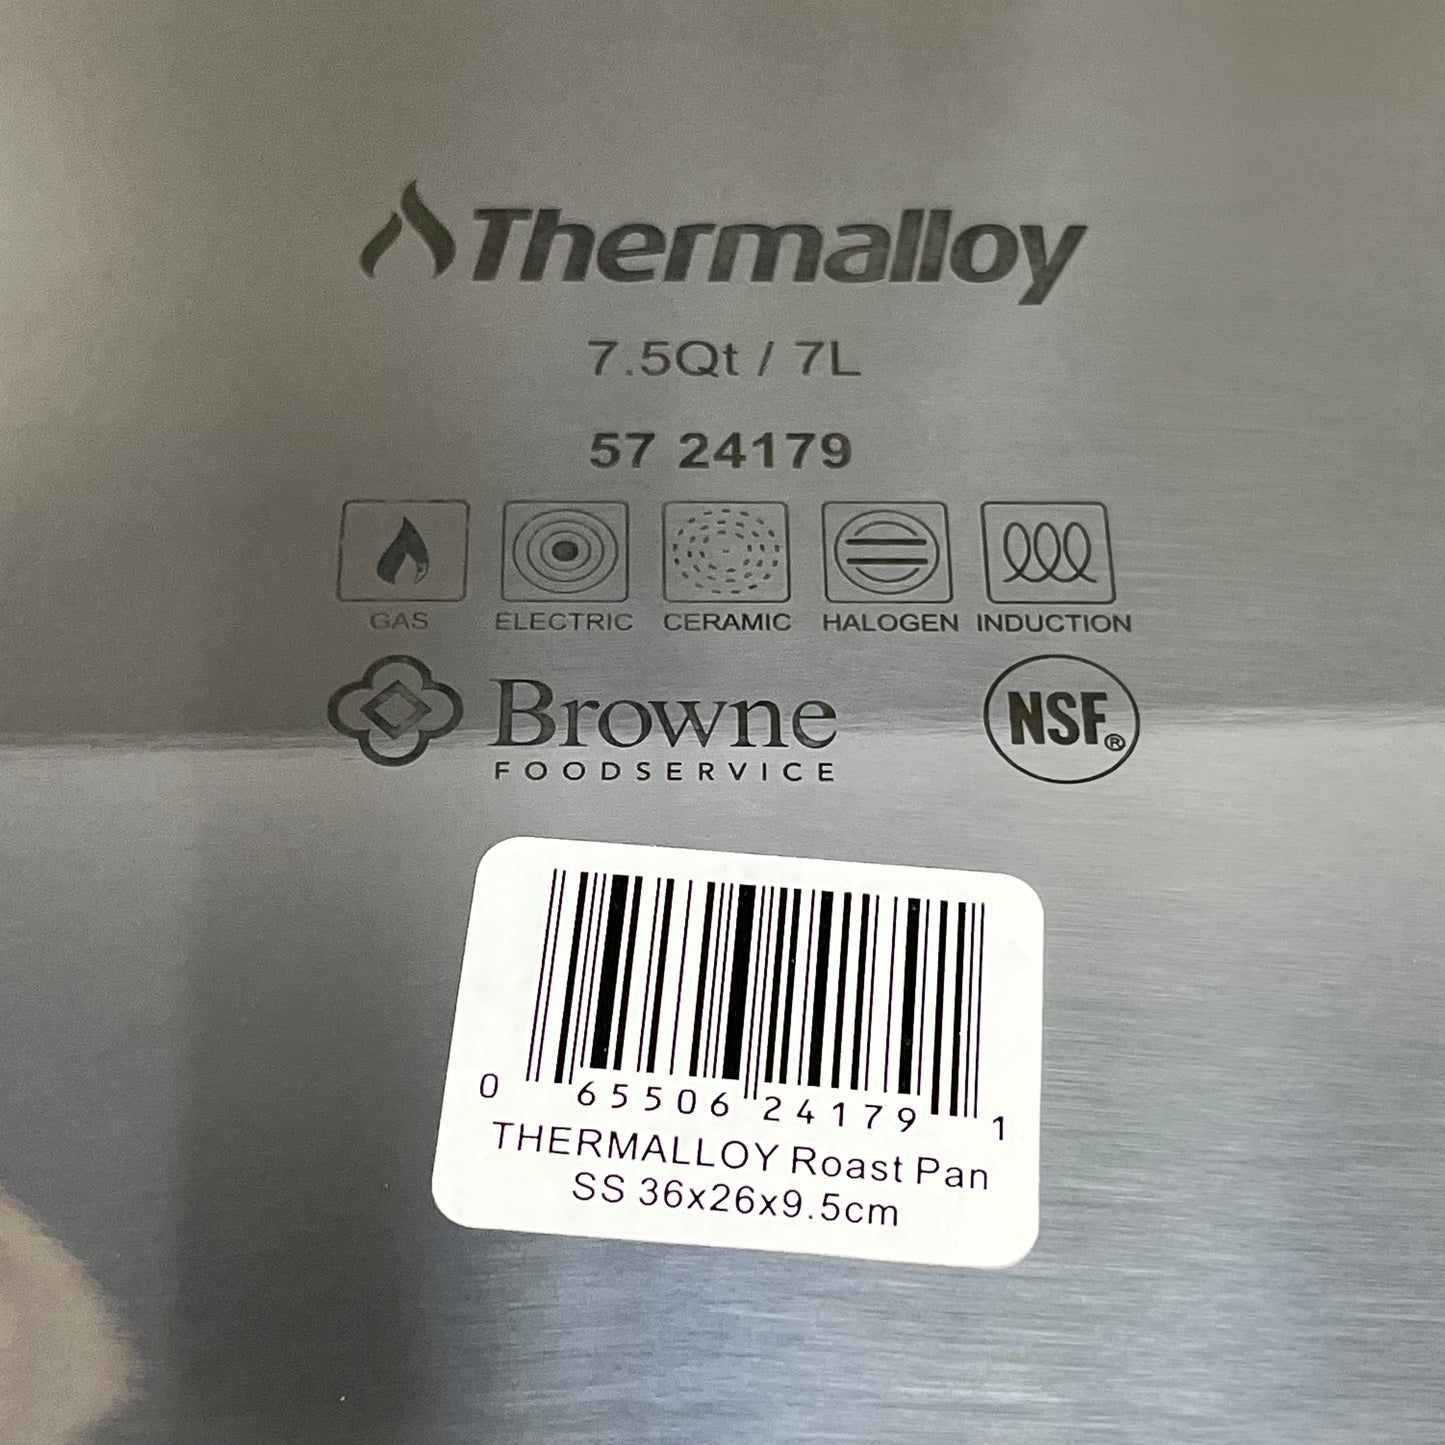 BROWNE Thermalloy Roast Pan 14" x 10.2" x 3.7" 5724179 (New)